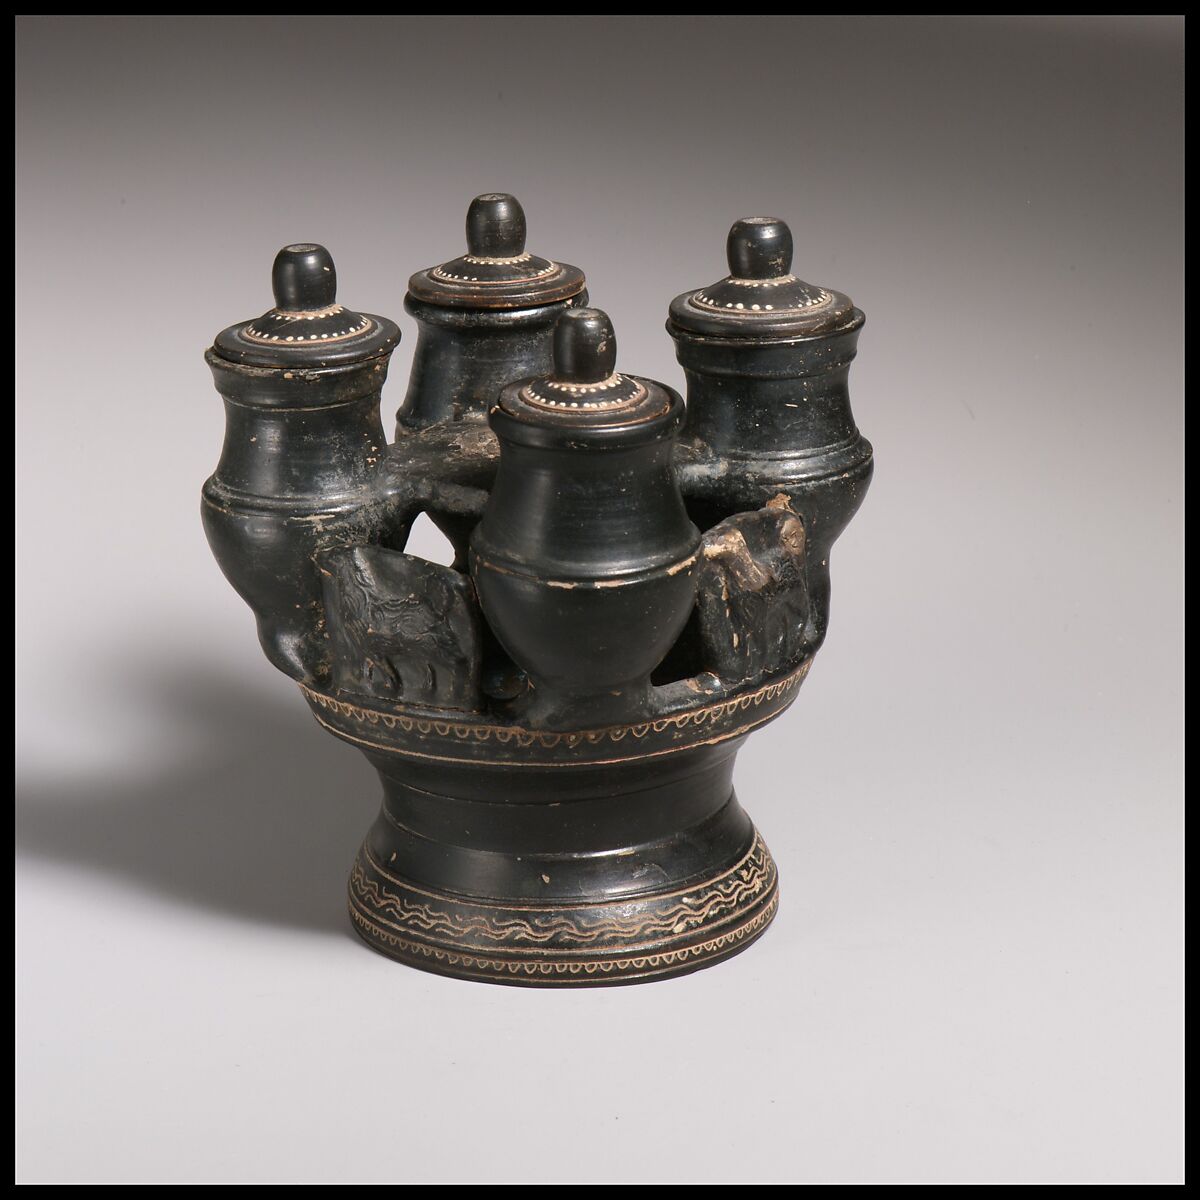 Terracotta kernos (vase for multiple offerings), Terracotta, Greek, South Italian, Campanian 